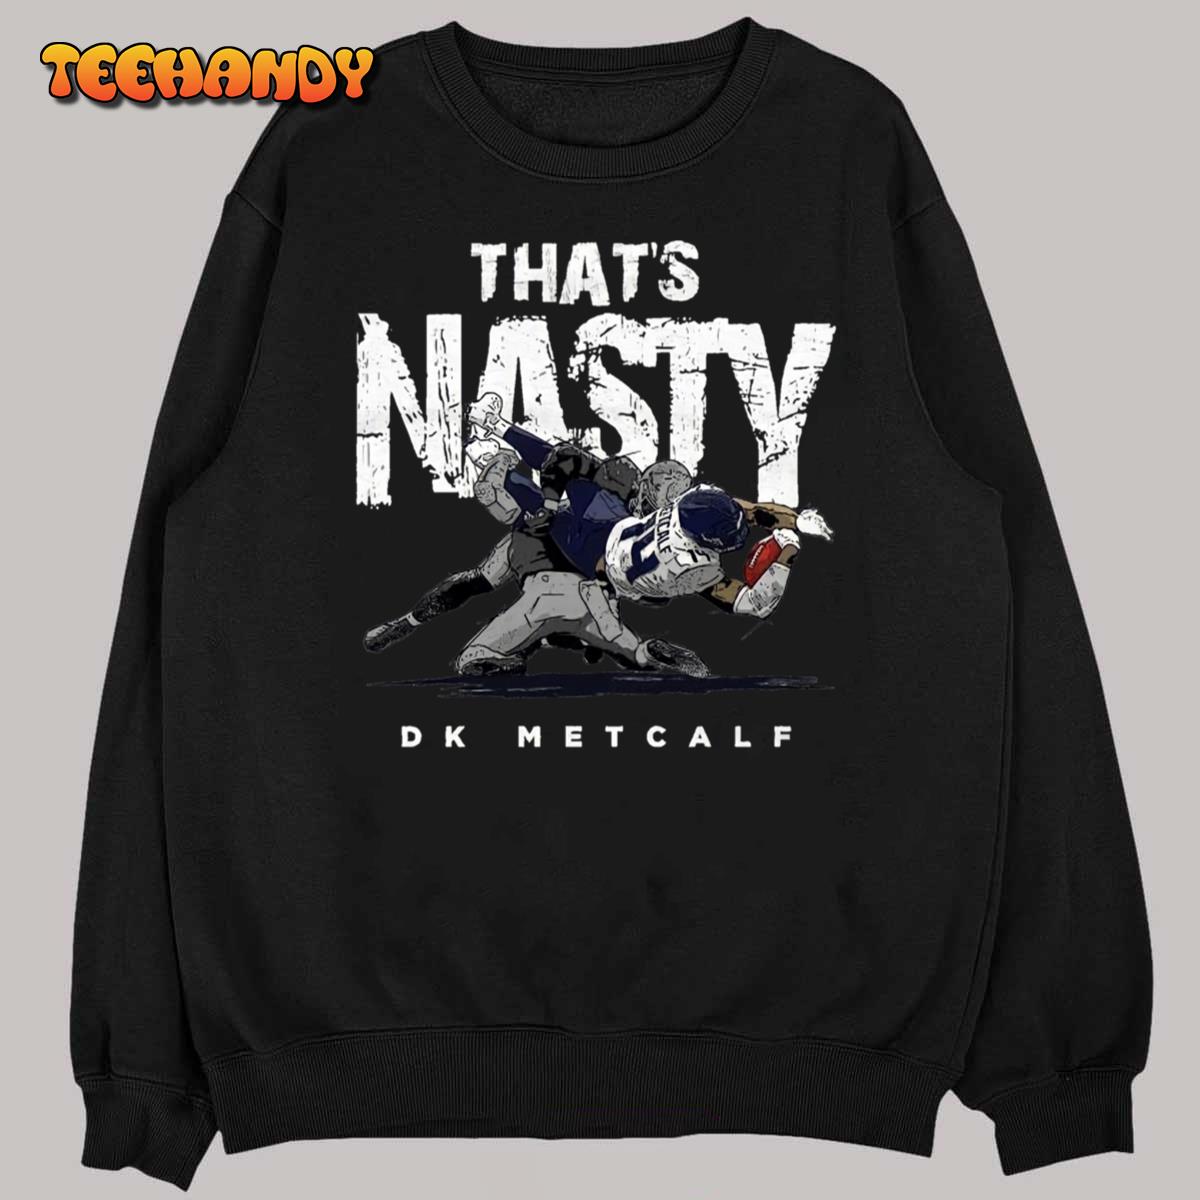 DK Metcalf That's Nasty Unisex T-Shirt